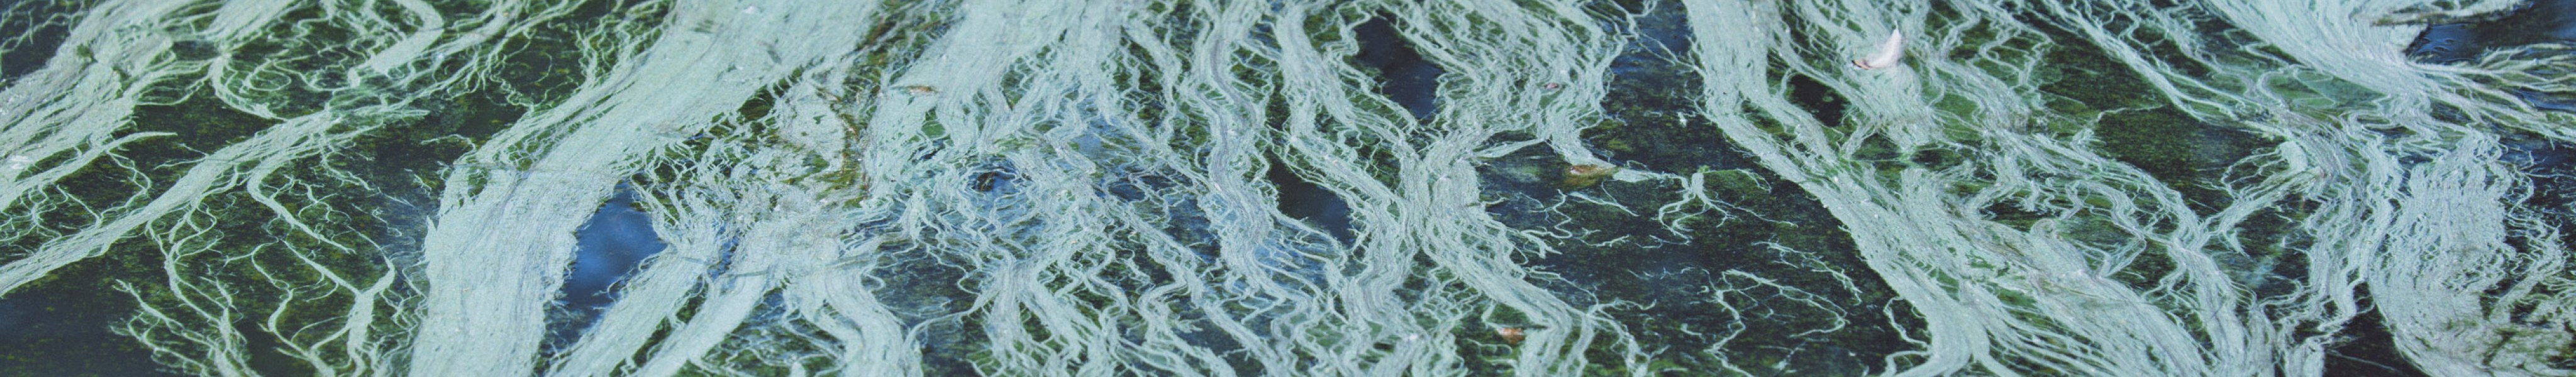 Algae streams in the ocean